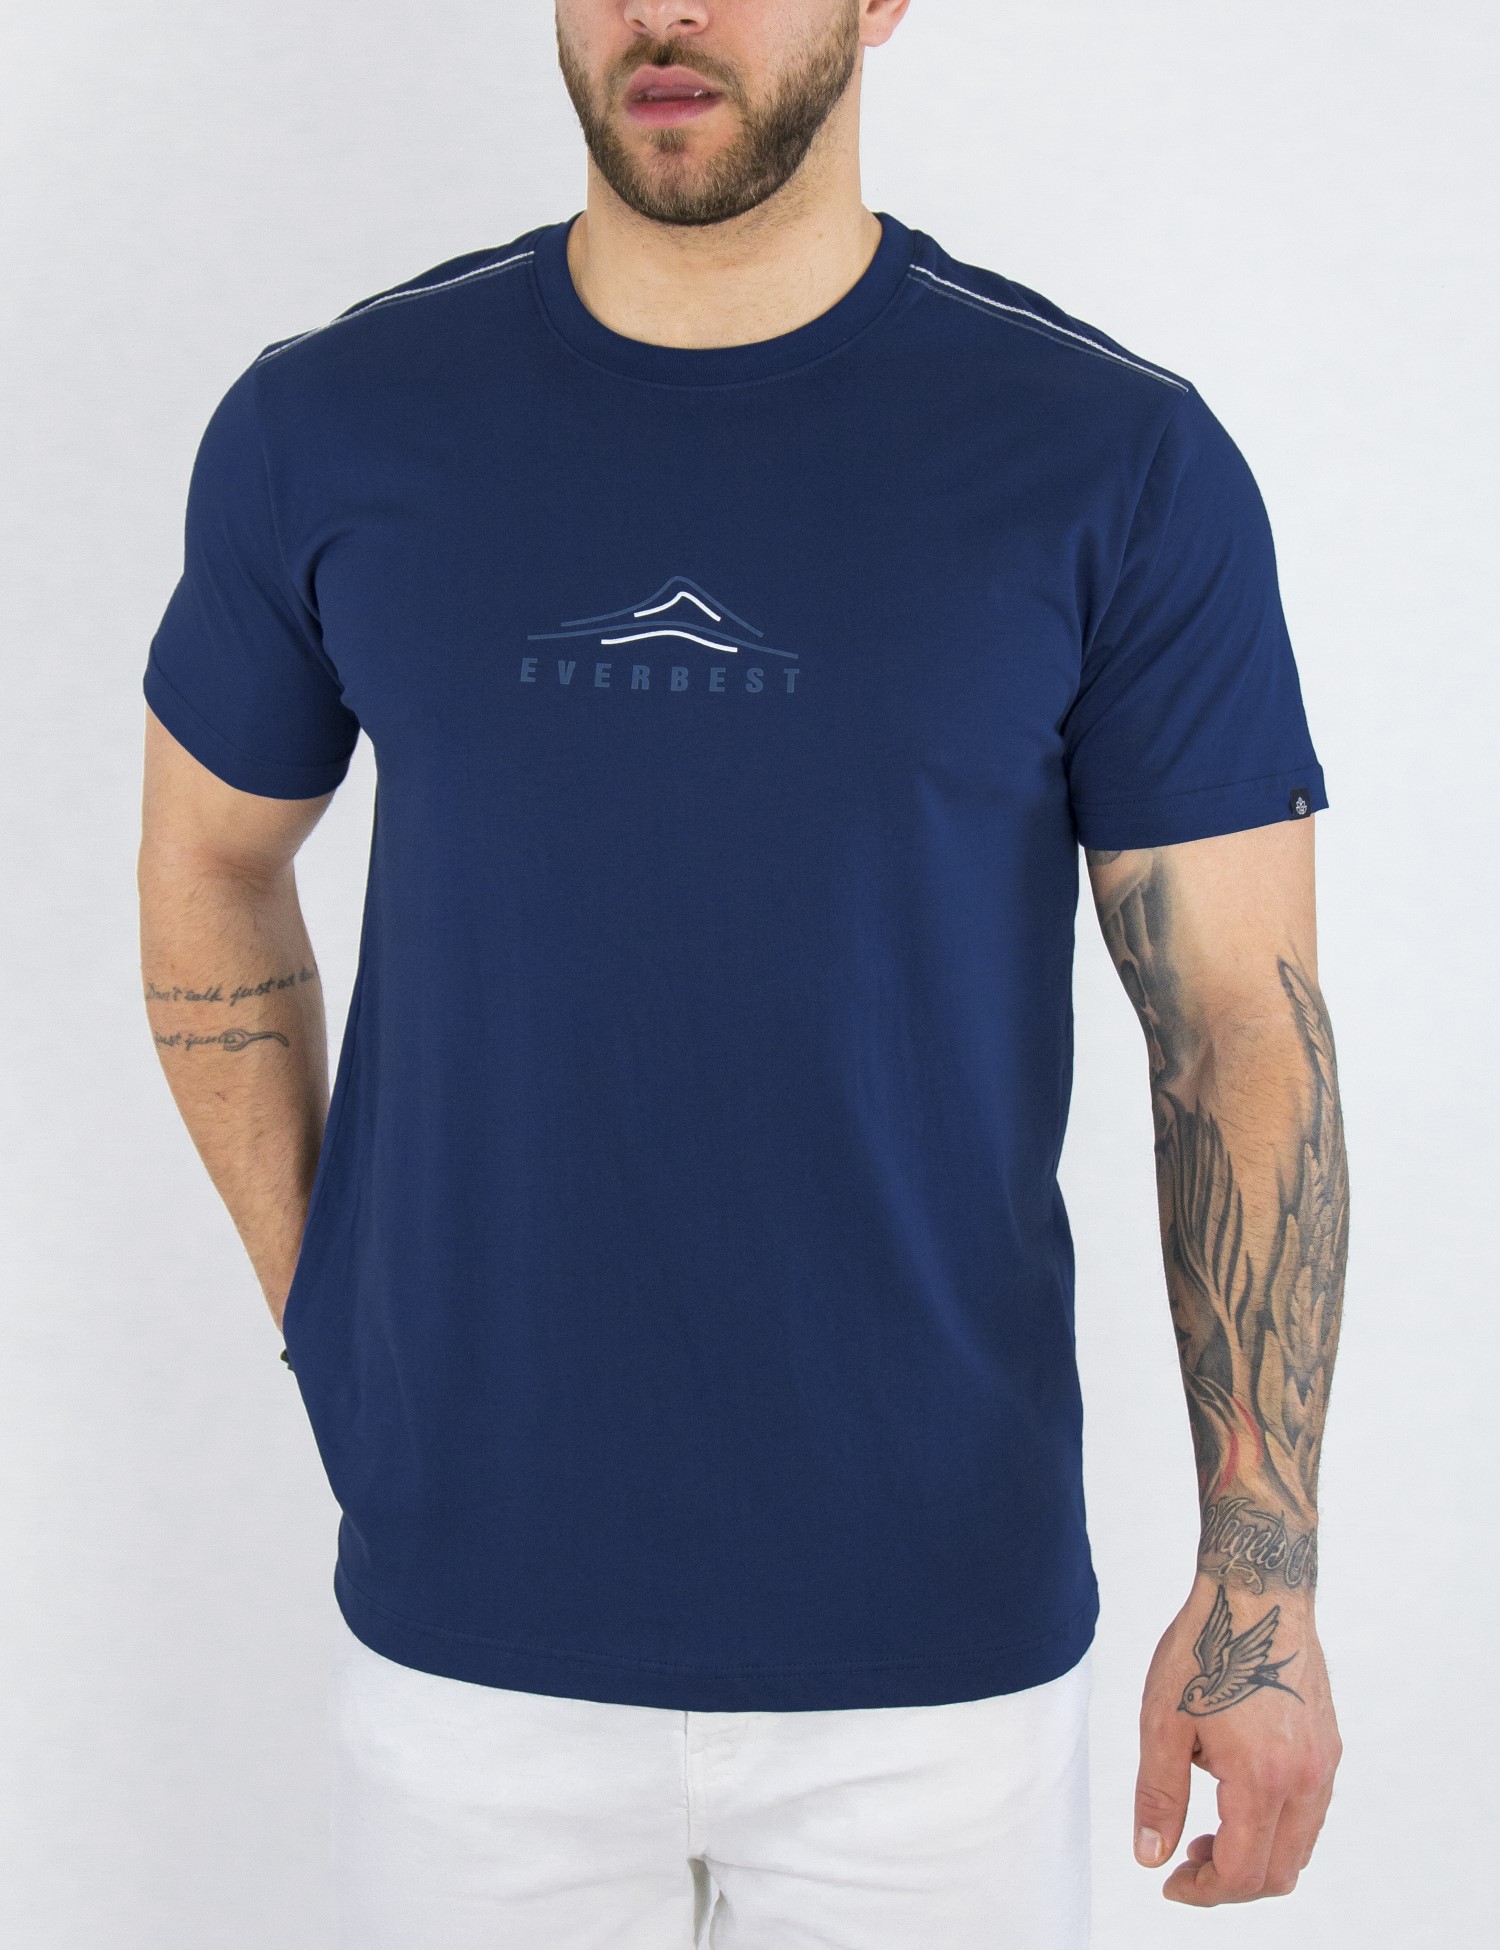 Everbest Everbest ανδρικο μπλε Plus Size Tshirt με τυπωμα 232810